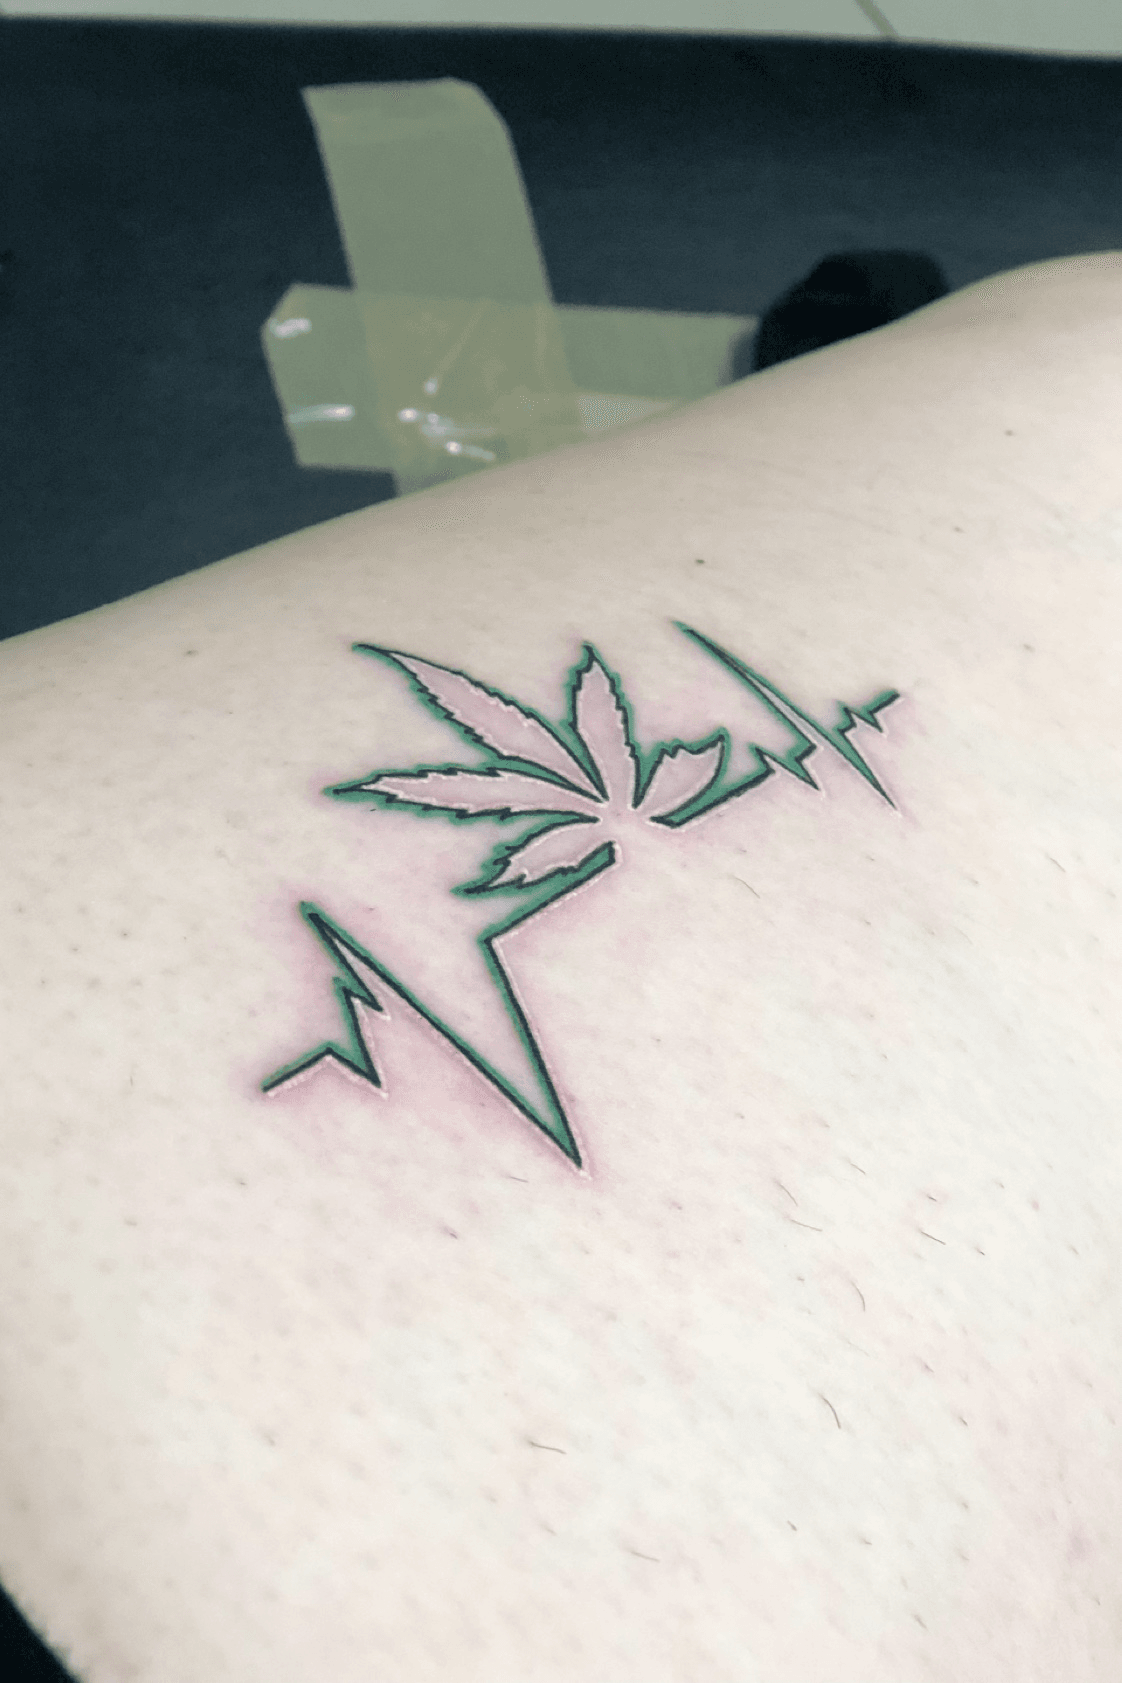 weed symbol tattoo